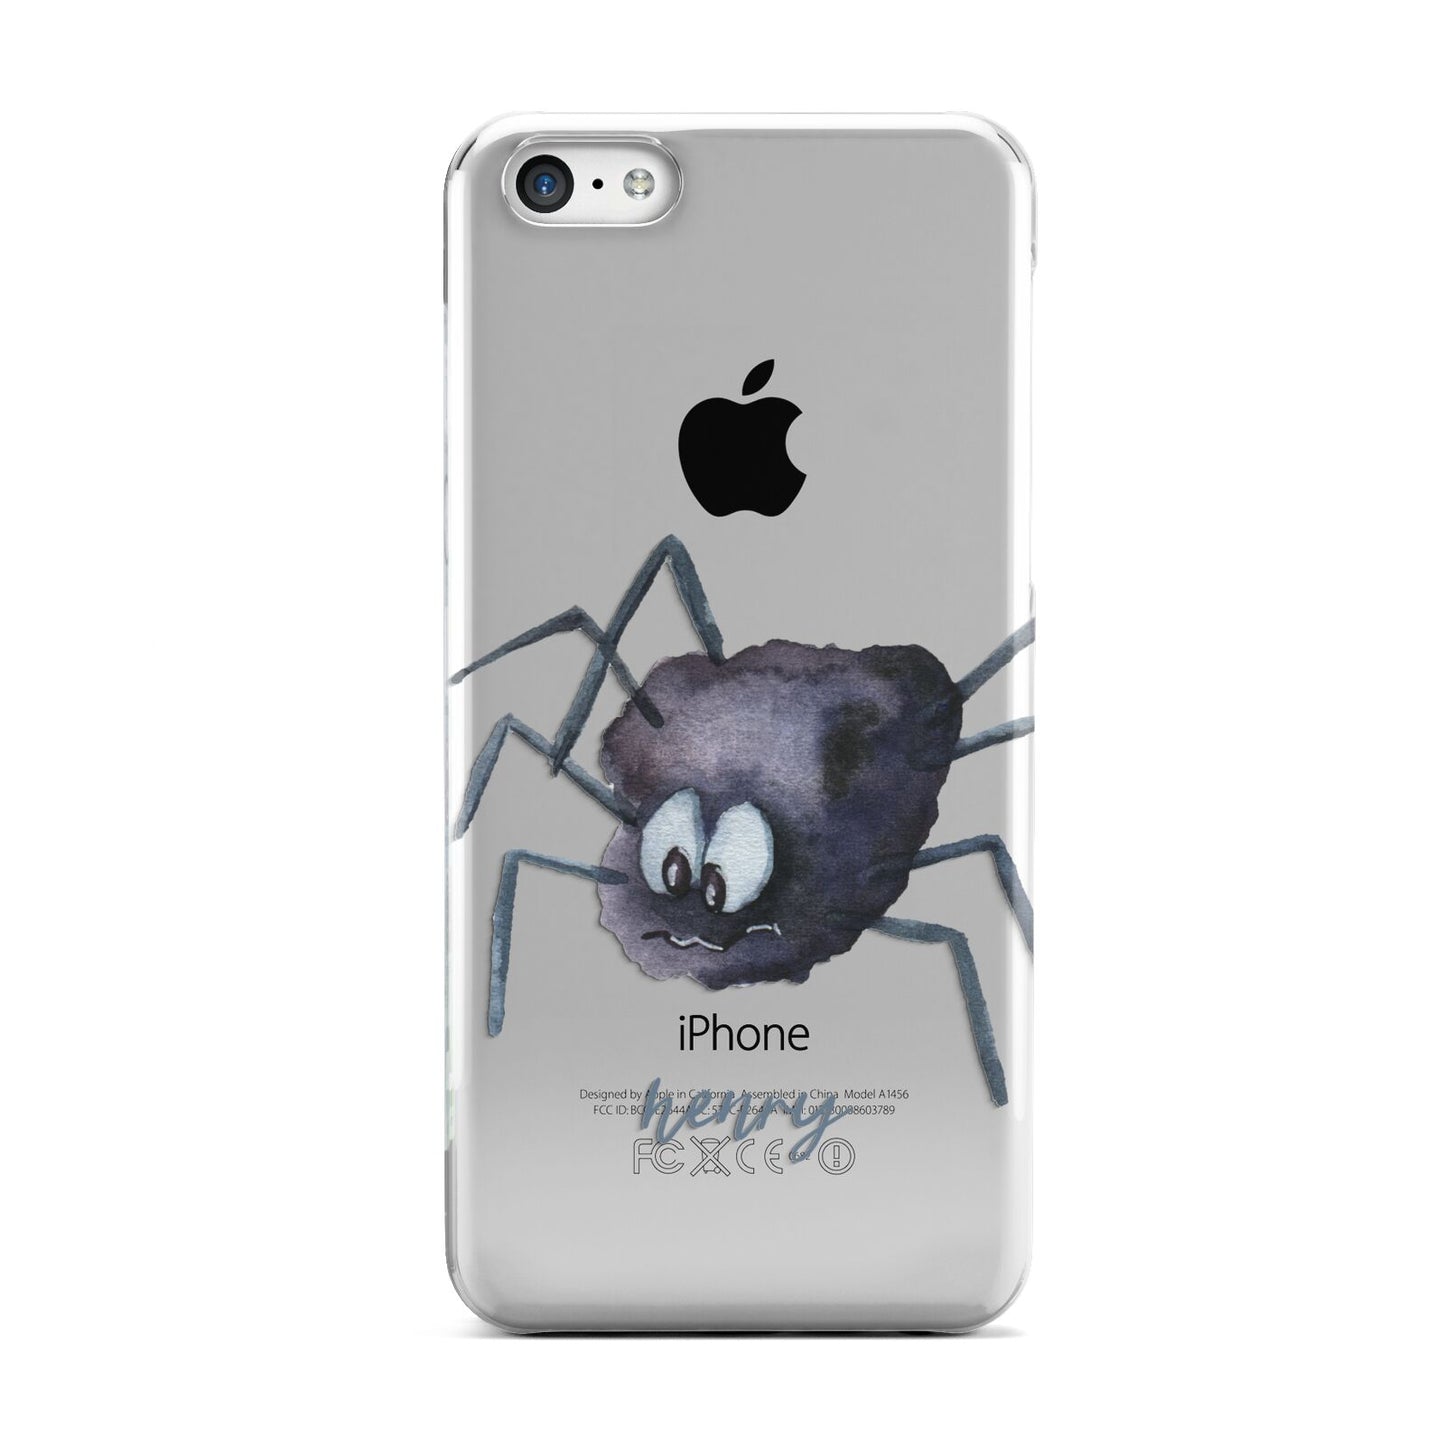 Scared Spider Personalised Apple iPhone 5c Case